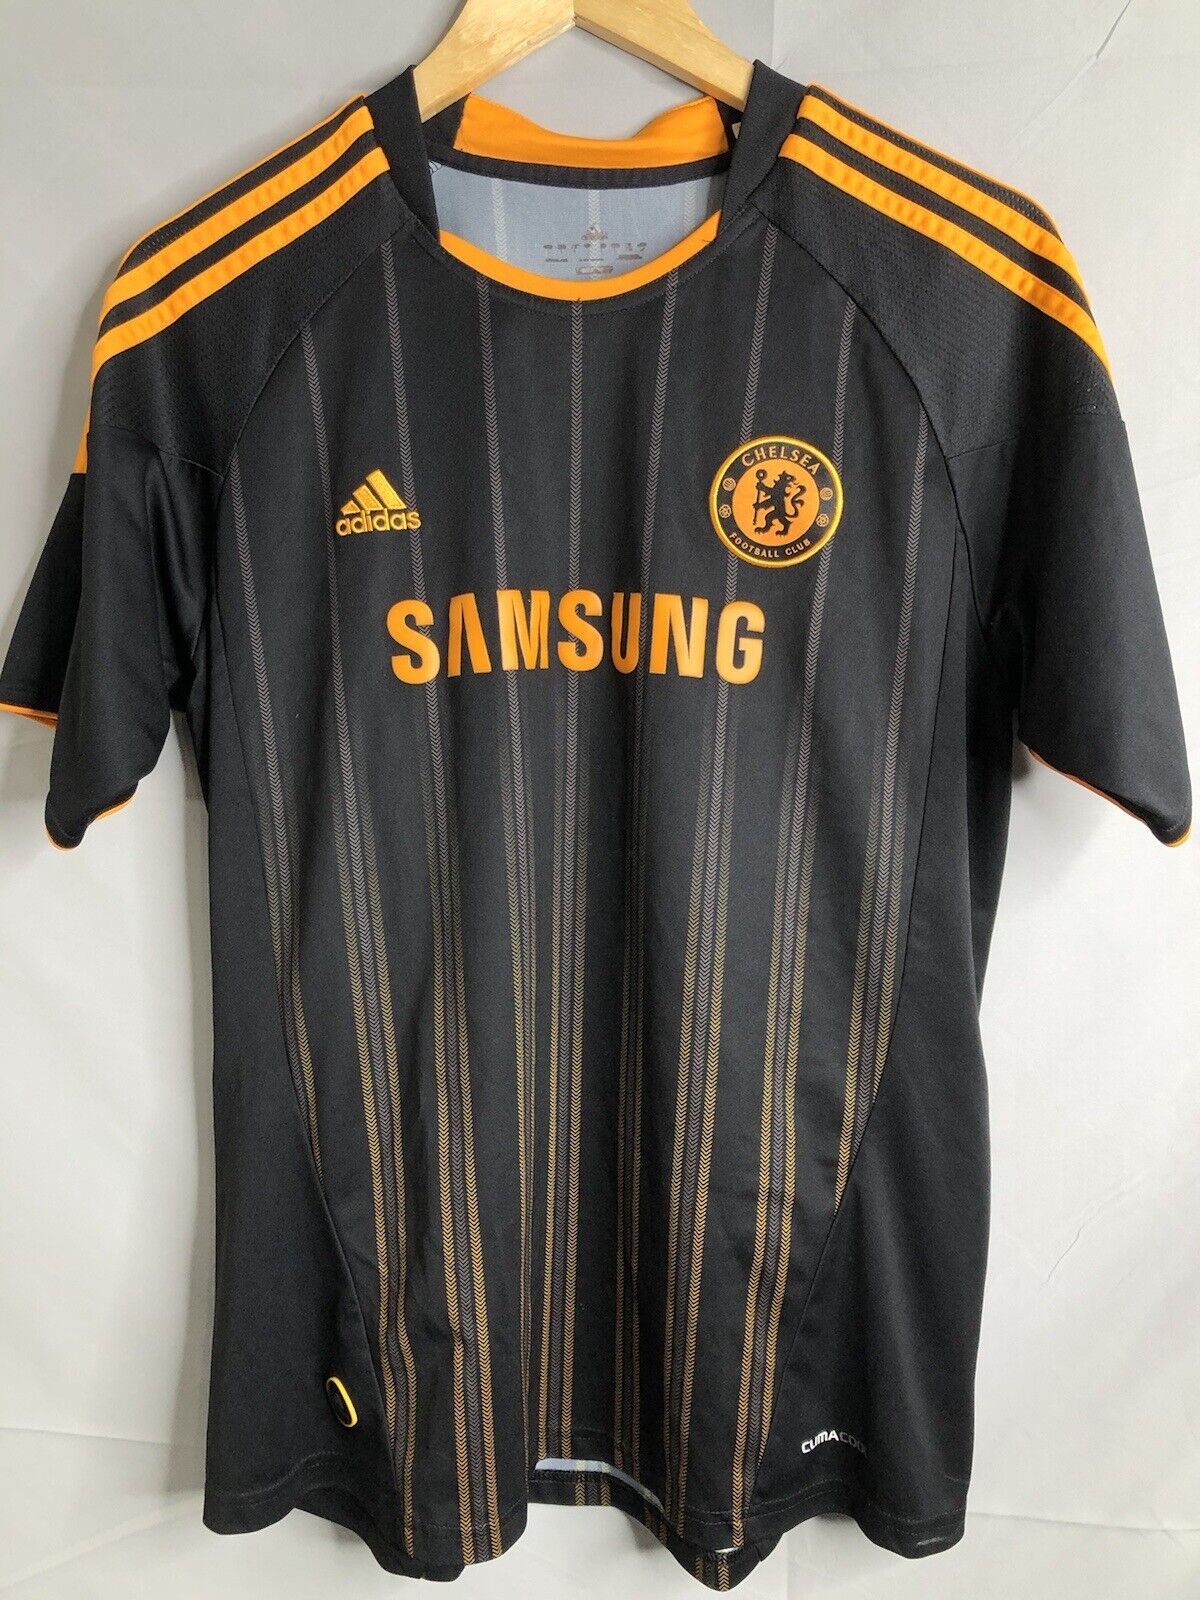 Adidas Chelsea Football Club Samsung Black Orange soccer 2010 T-shirt jersey S